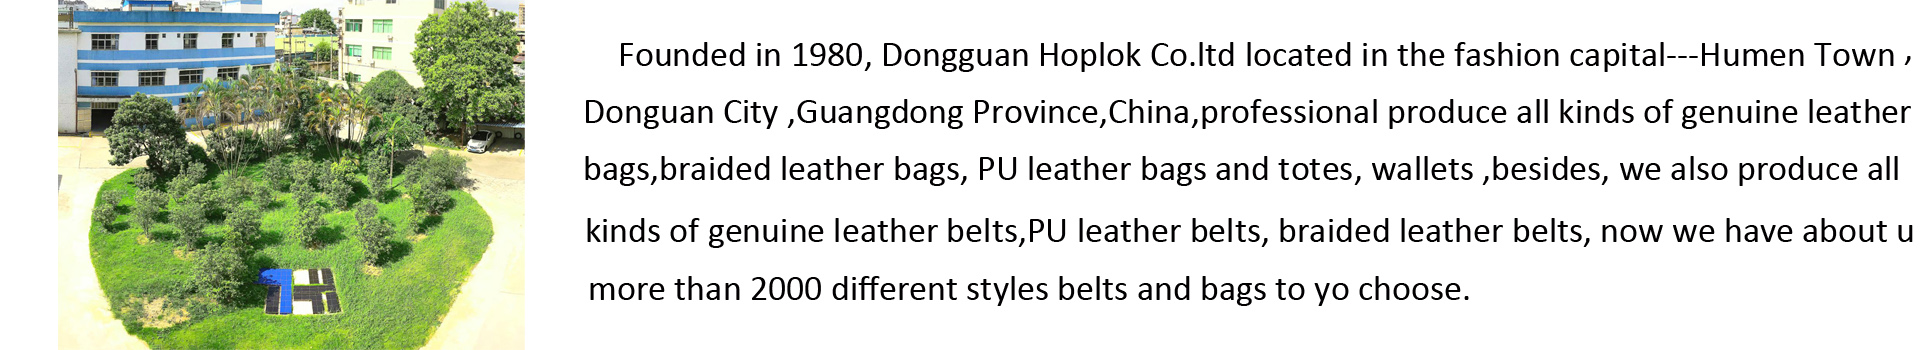 Dongguan Hop Lok Leather Products Co., Ltd.